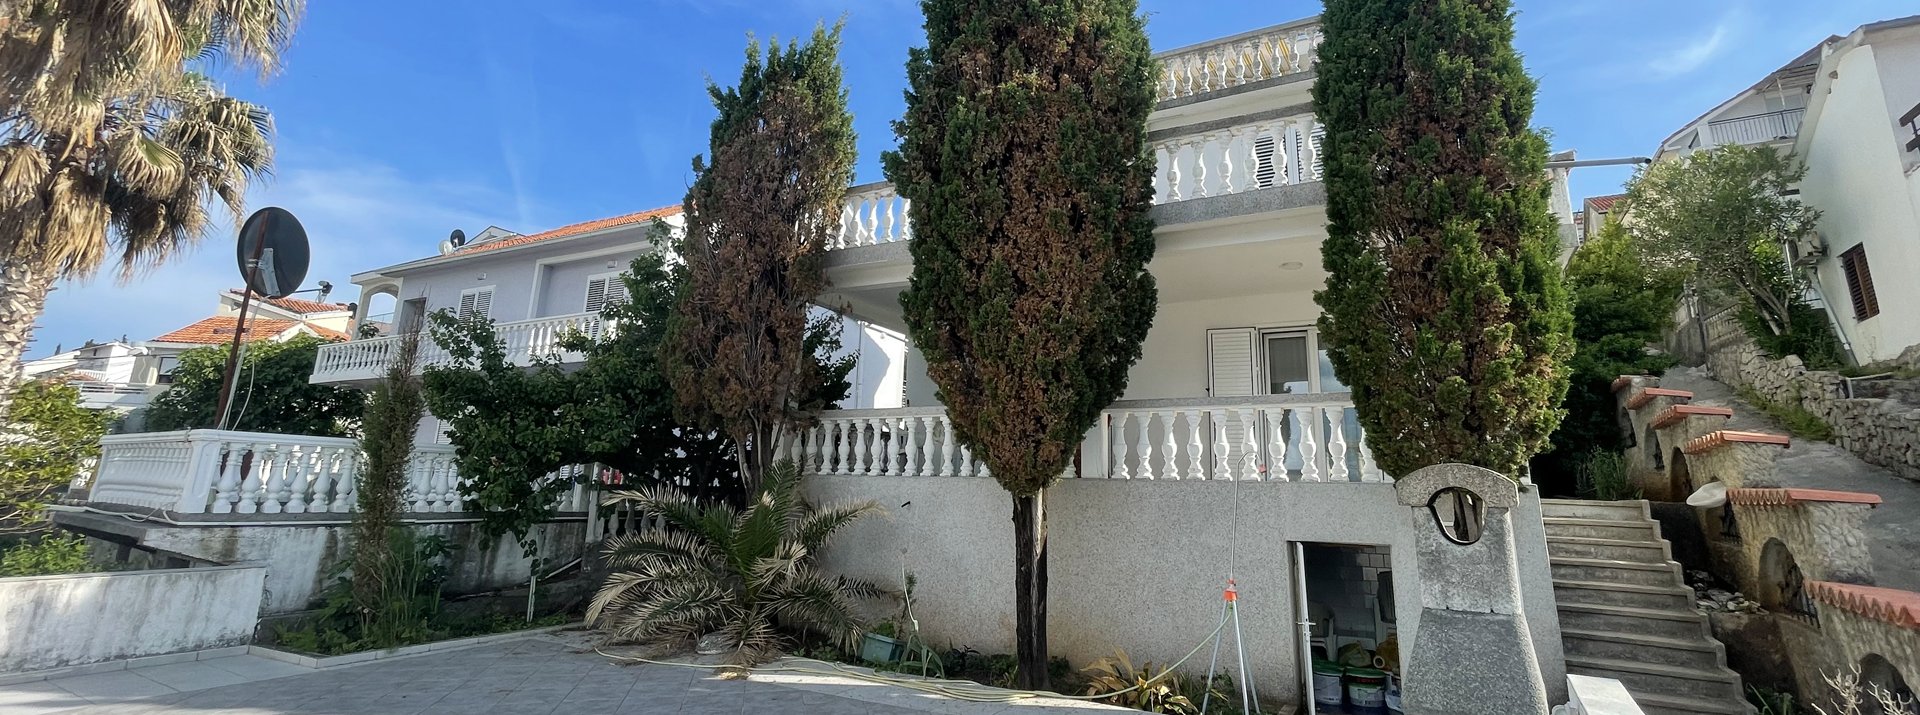 villa-valeria-montenegro-rent-1-4.jpg